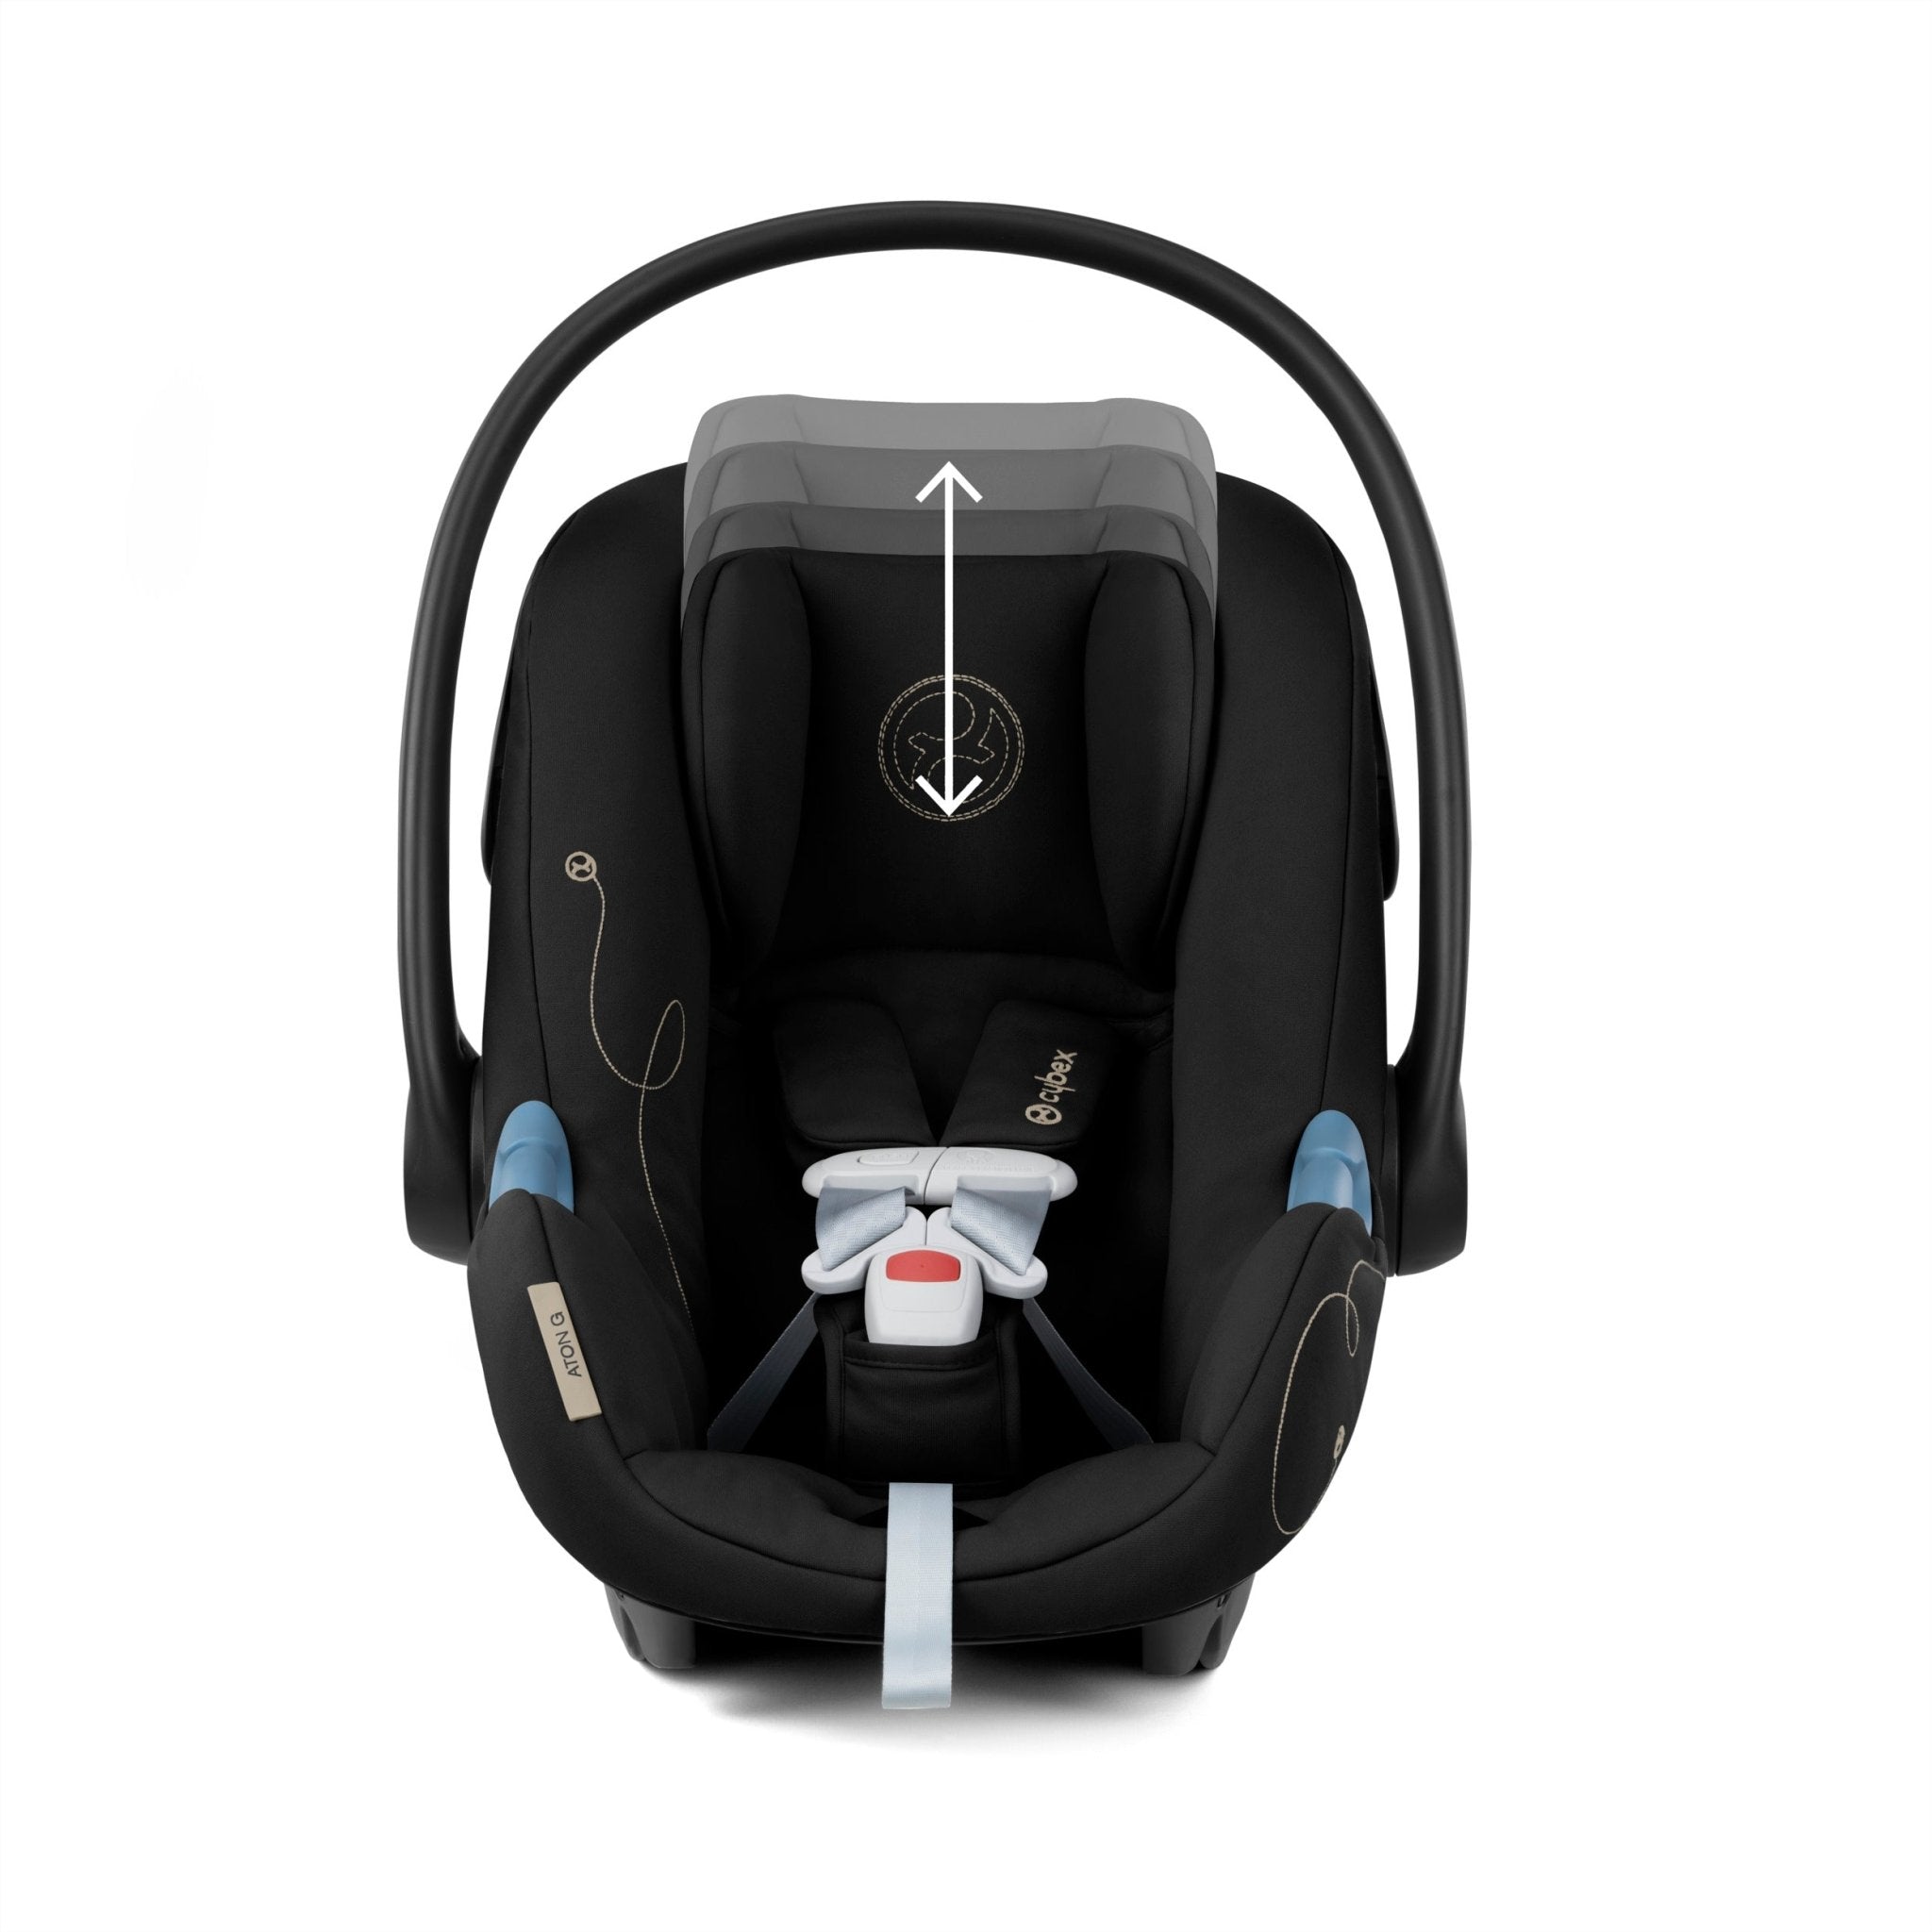 Cybex Aton G Sensorsafe Infant Car Seat - ANB Baby -4063846397150$100 - $300